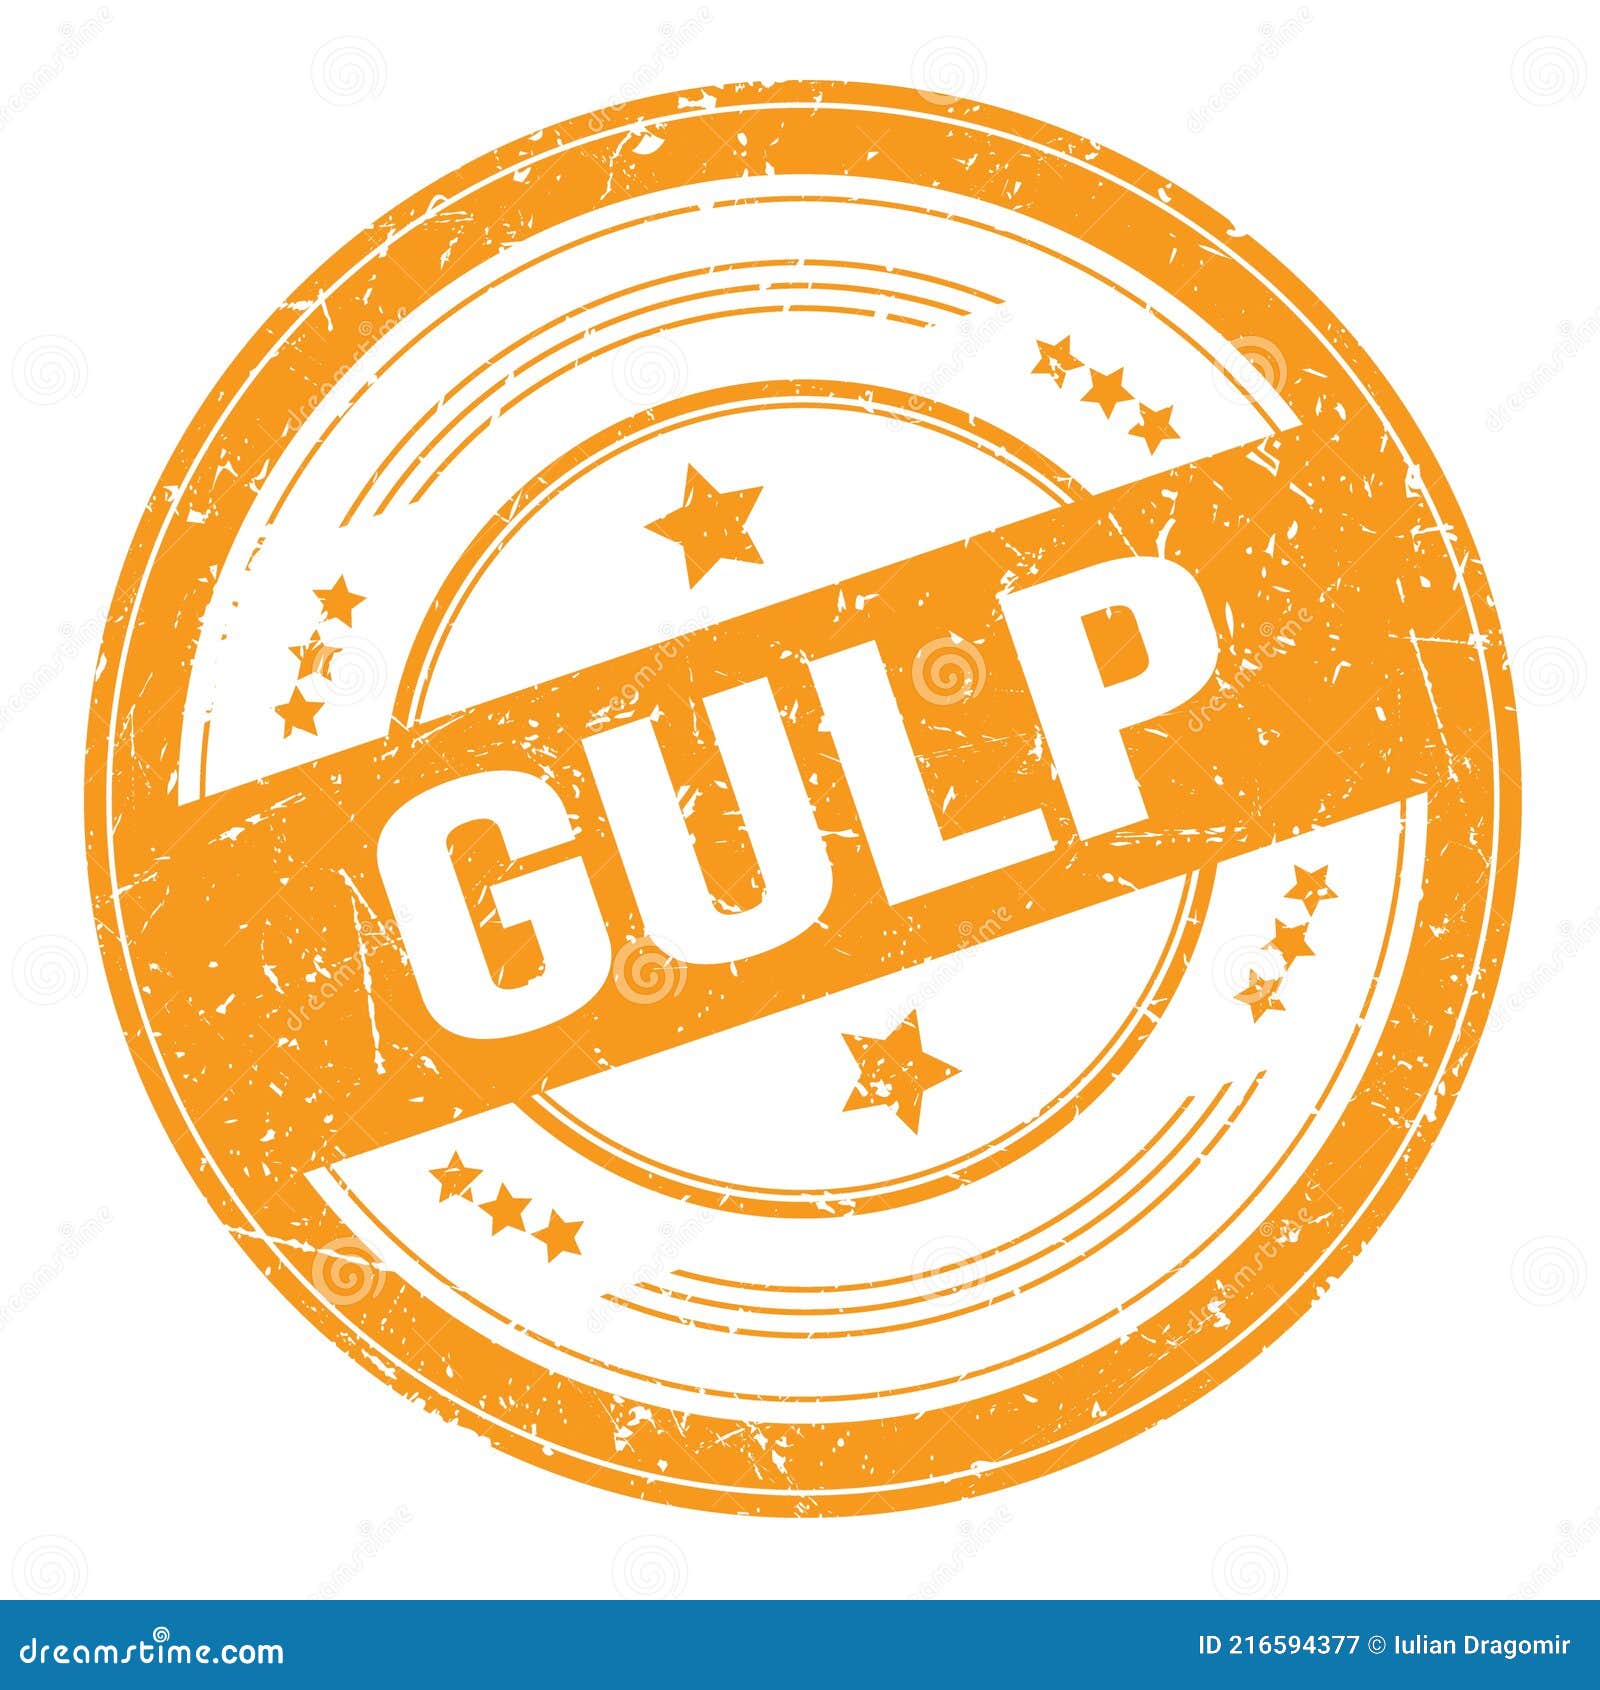 18 Gulp Logo Stock Illustrations, Vectors & Clipart - Dreamstime